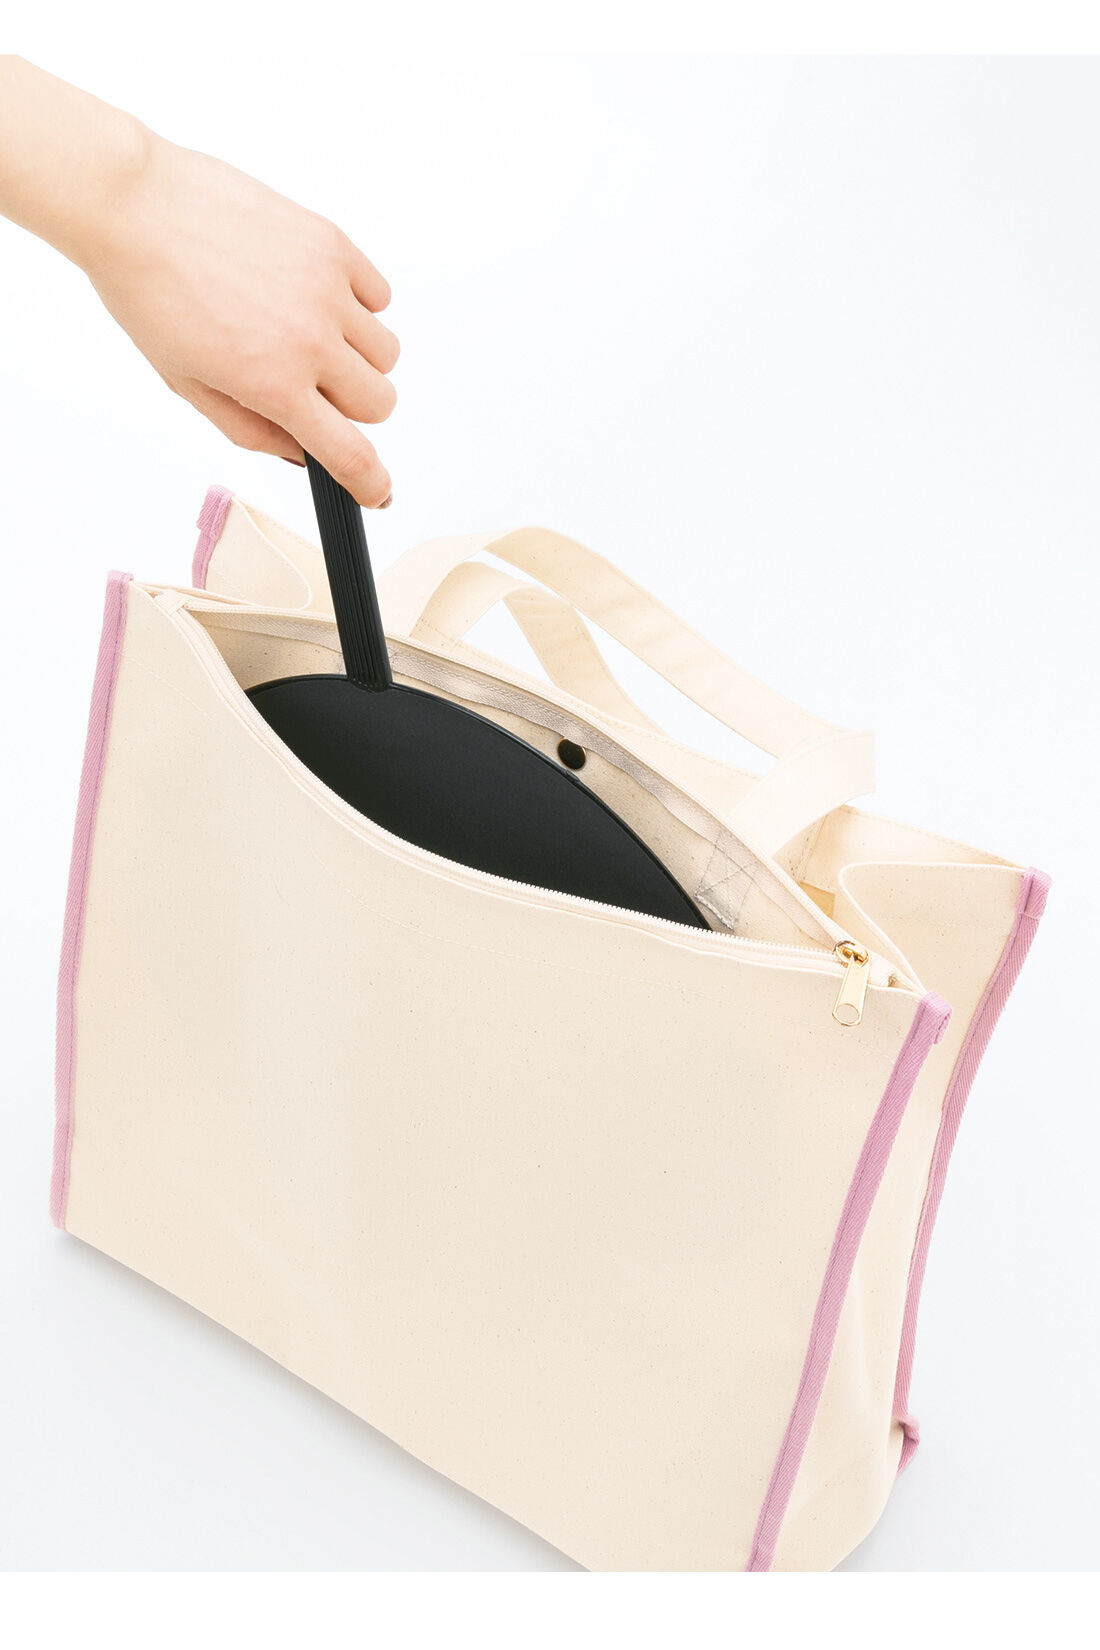 OSYAIRO|OSYAIRO　自立して便利！ うちわポケット付き ロゴトートバッグ〈ピンク〉|背面にはファスナー付きの隠しポケットが!　ジャンボうちわが柄まですっぽり。